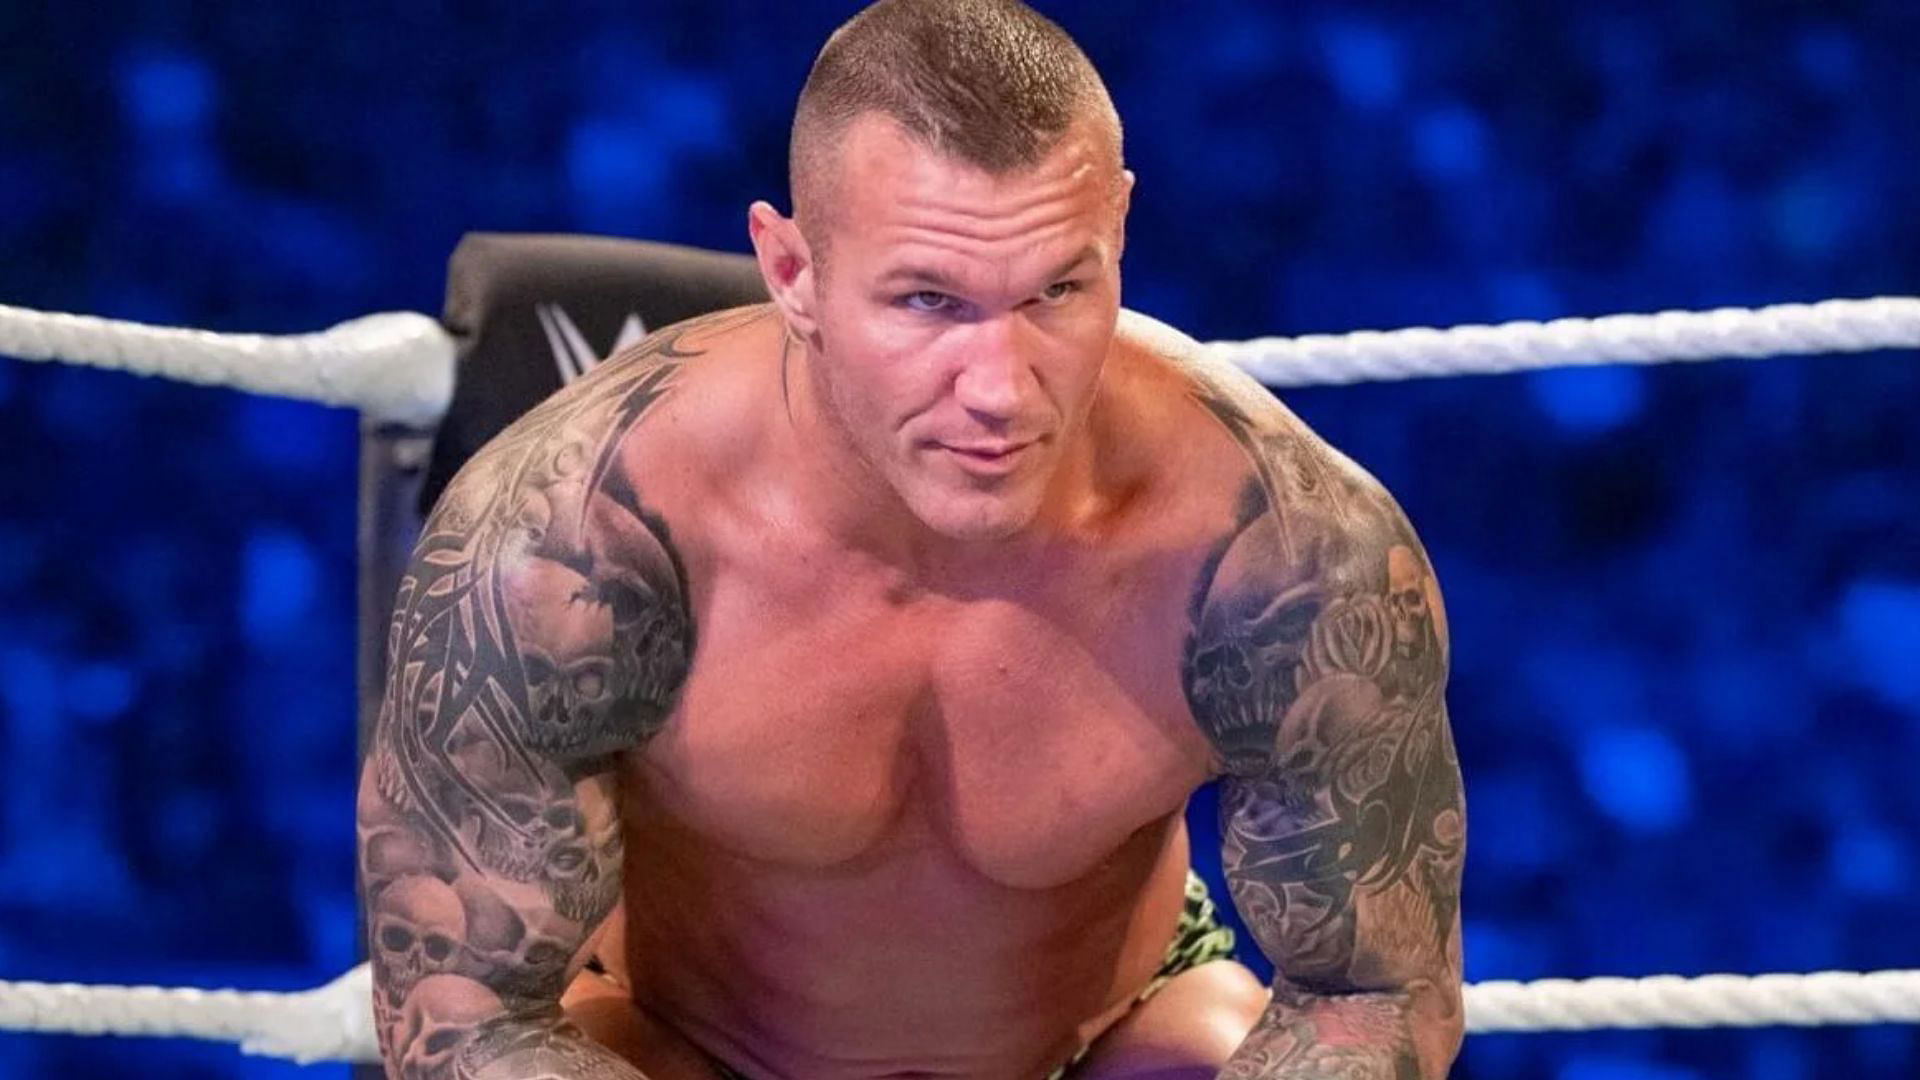 Randy Orton to bring back female WWE star to go after Rhea Ripley